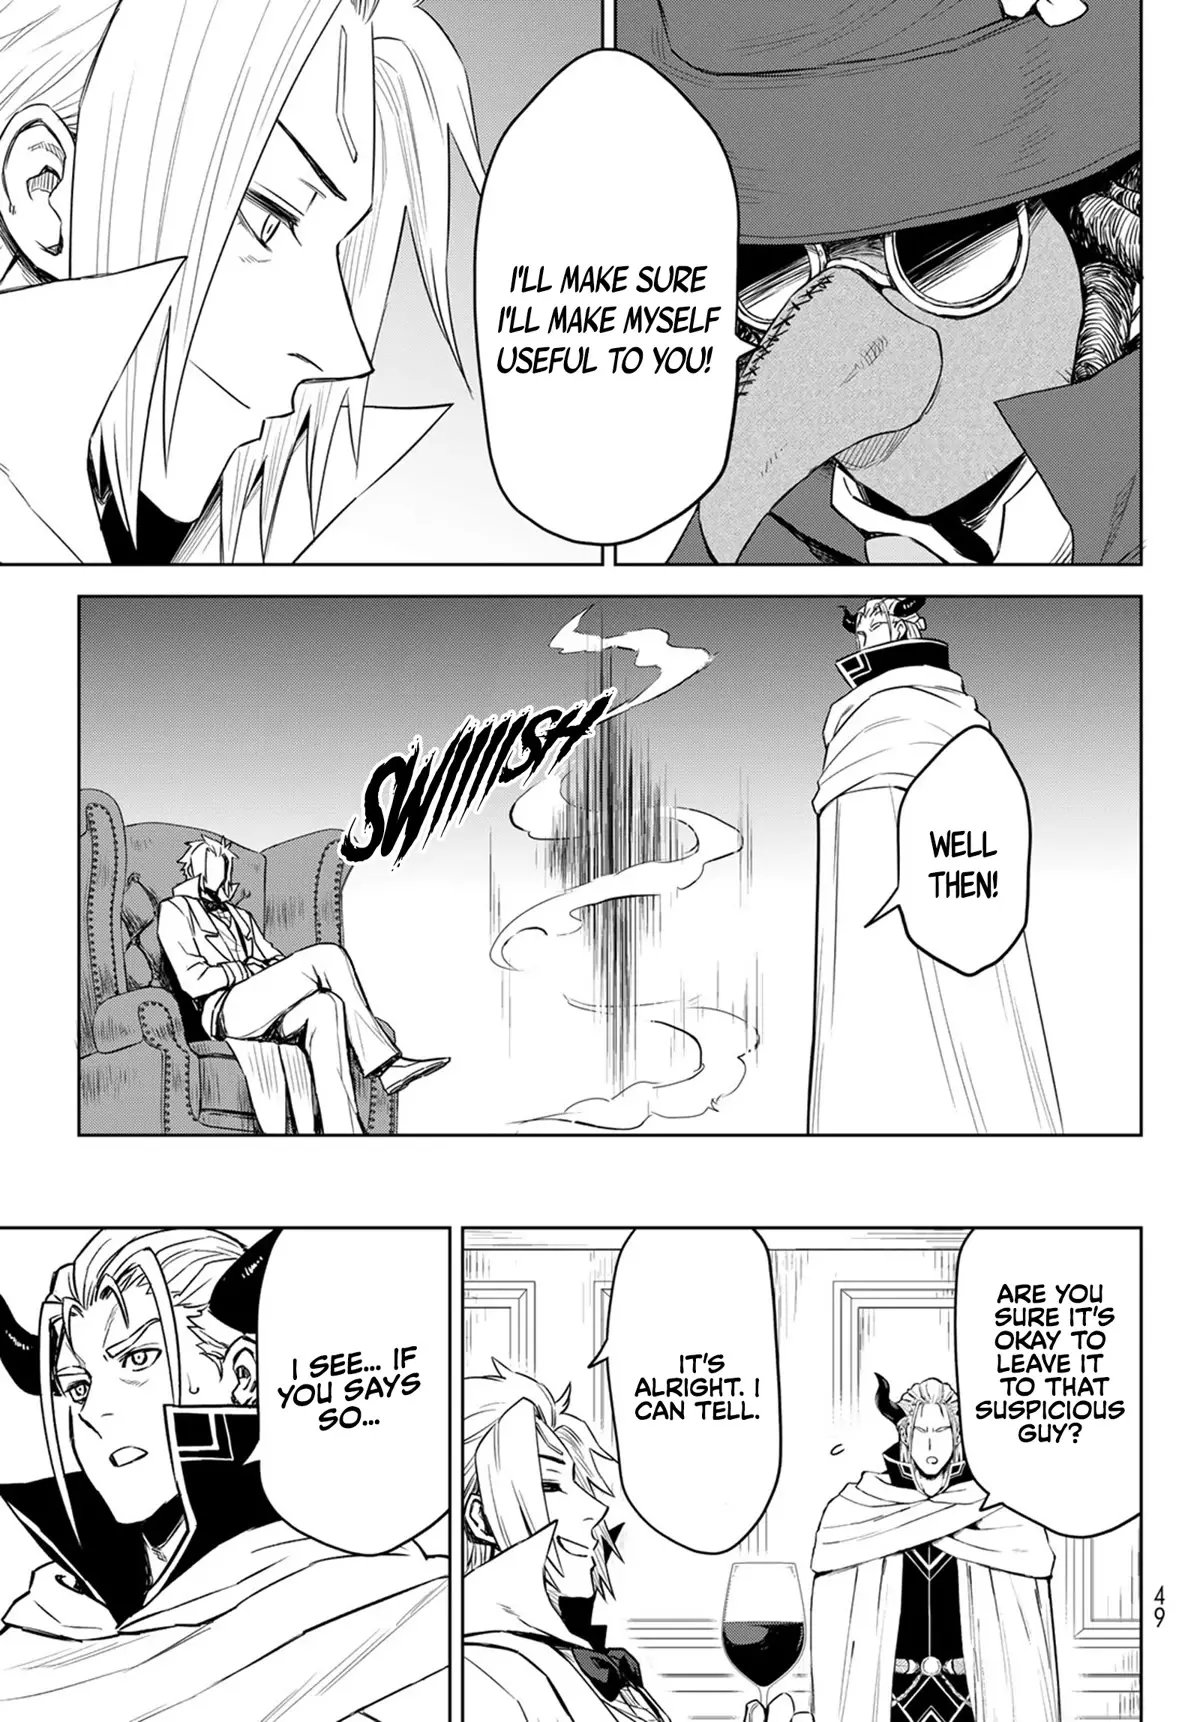 Tensei Shitara Slime Datta Ken: Clayman Revenge - 7 page 9-485cad21